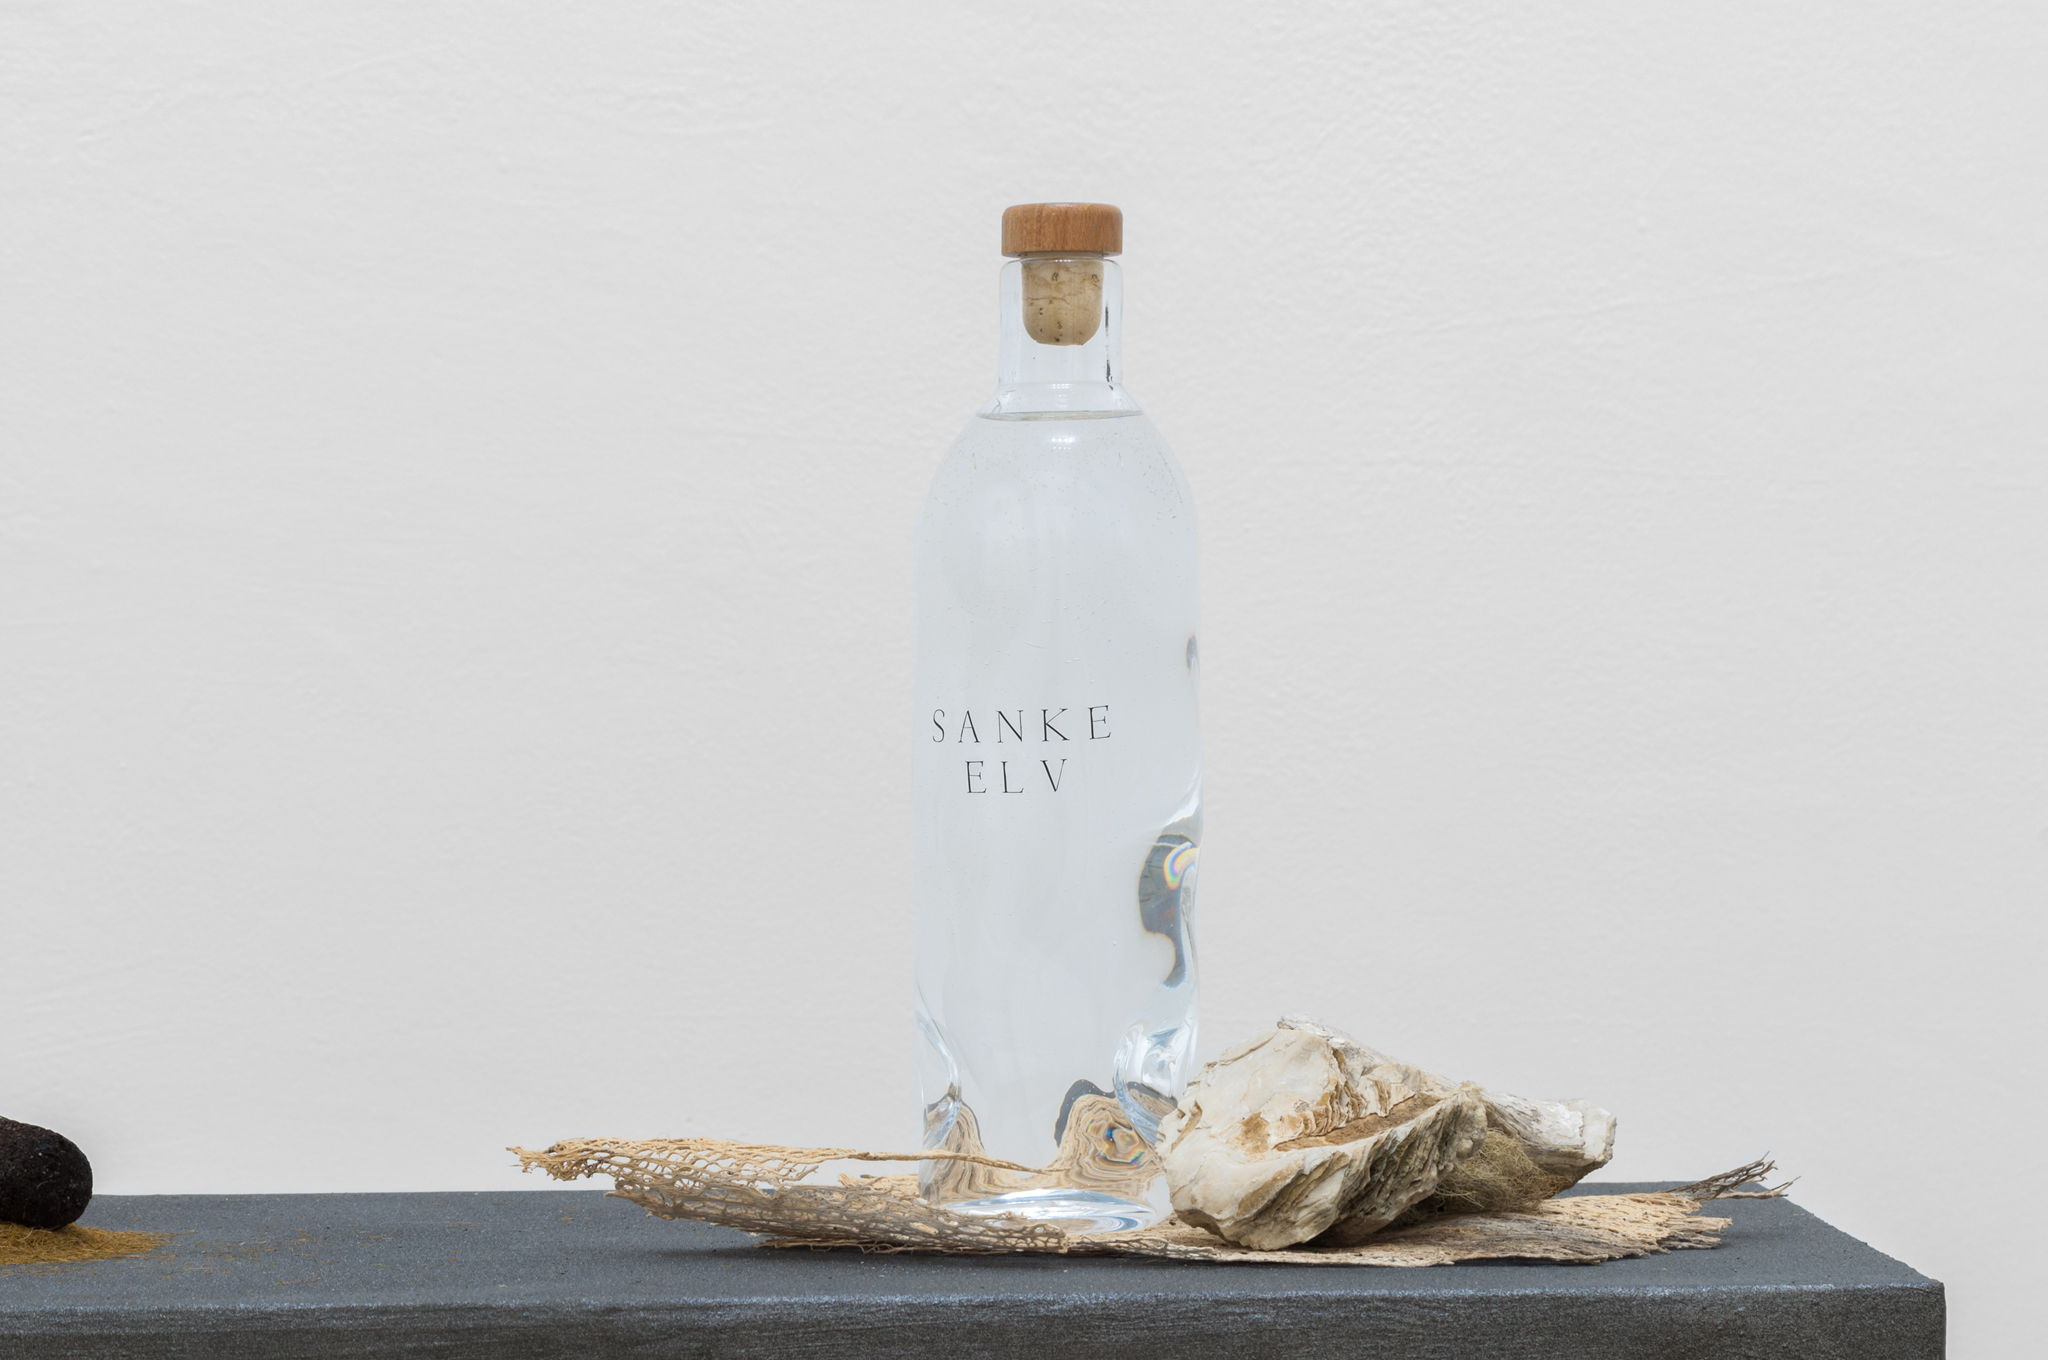 Andreas Ervik, 'S A N K E' (2017). ELV (unfiltered Norwegian river water bottle, blown glass bottle).